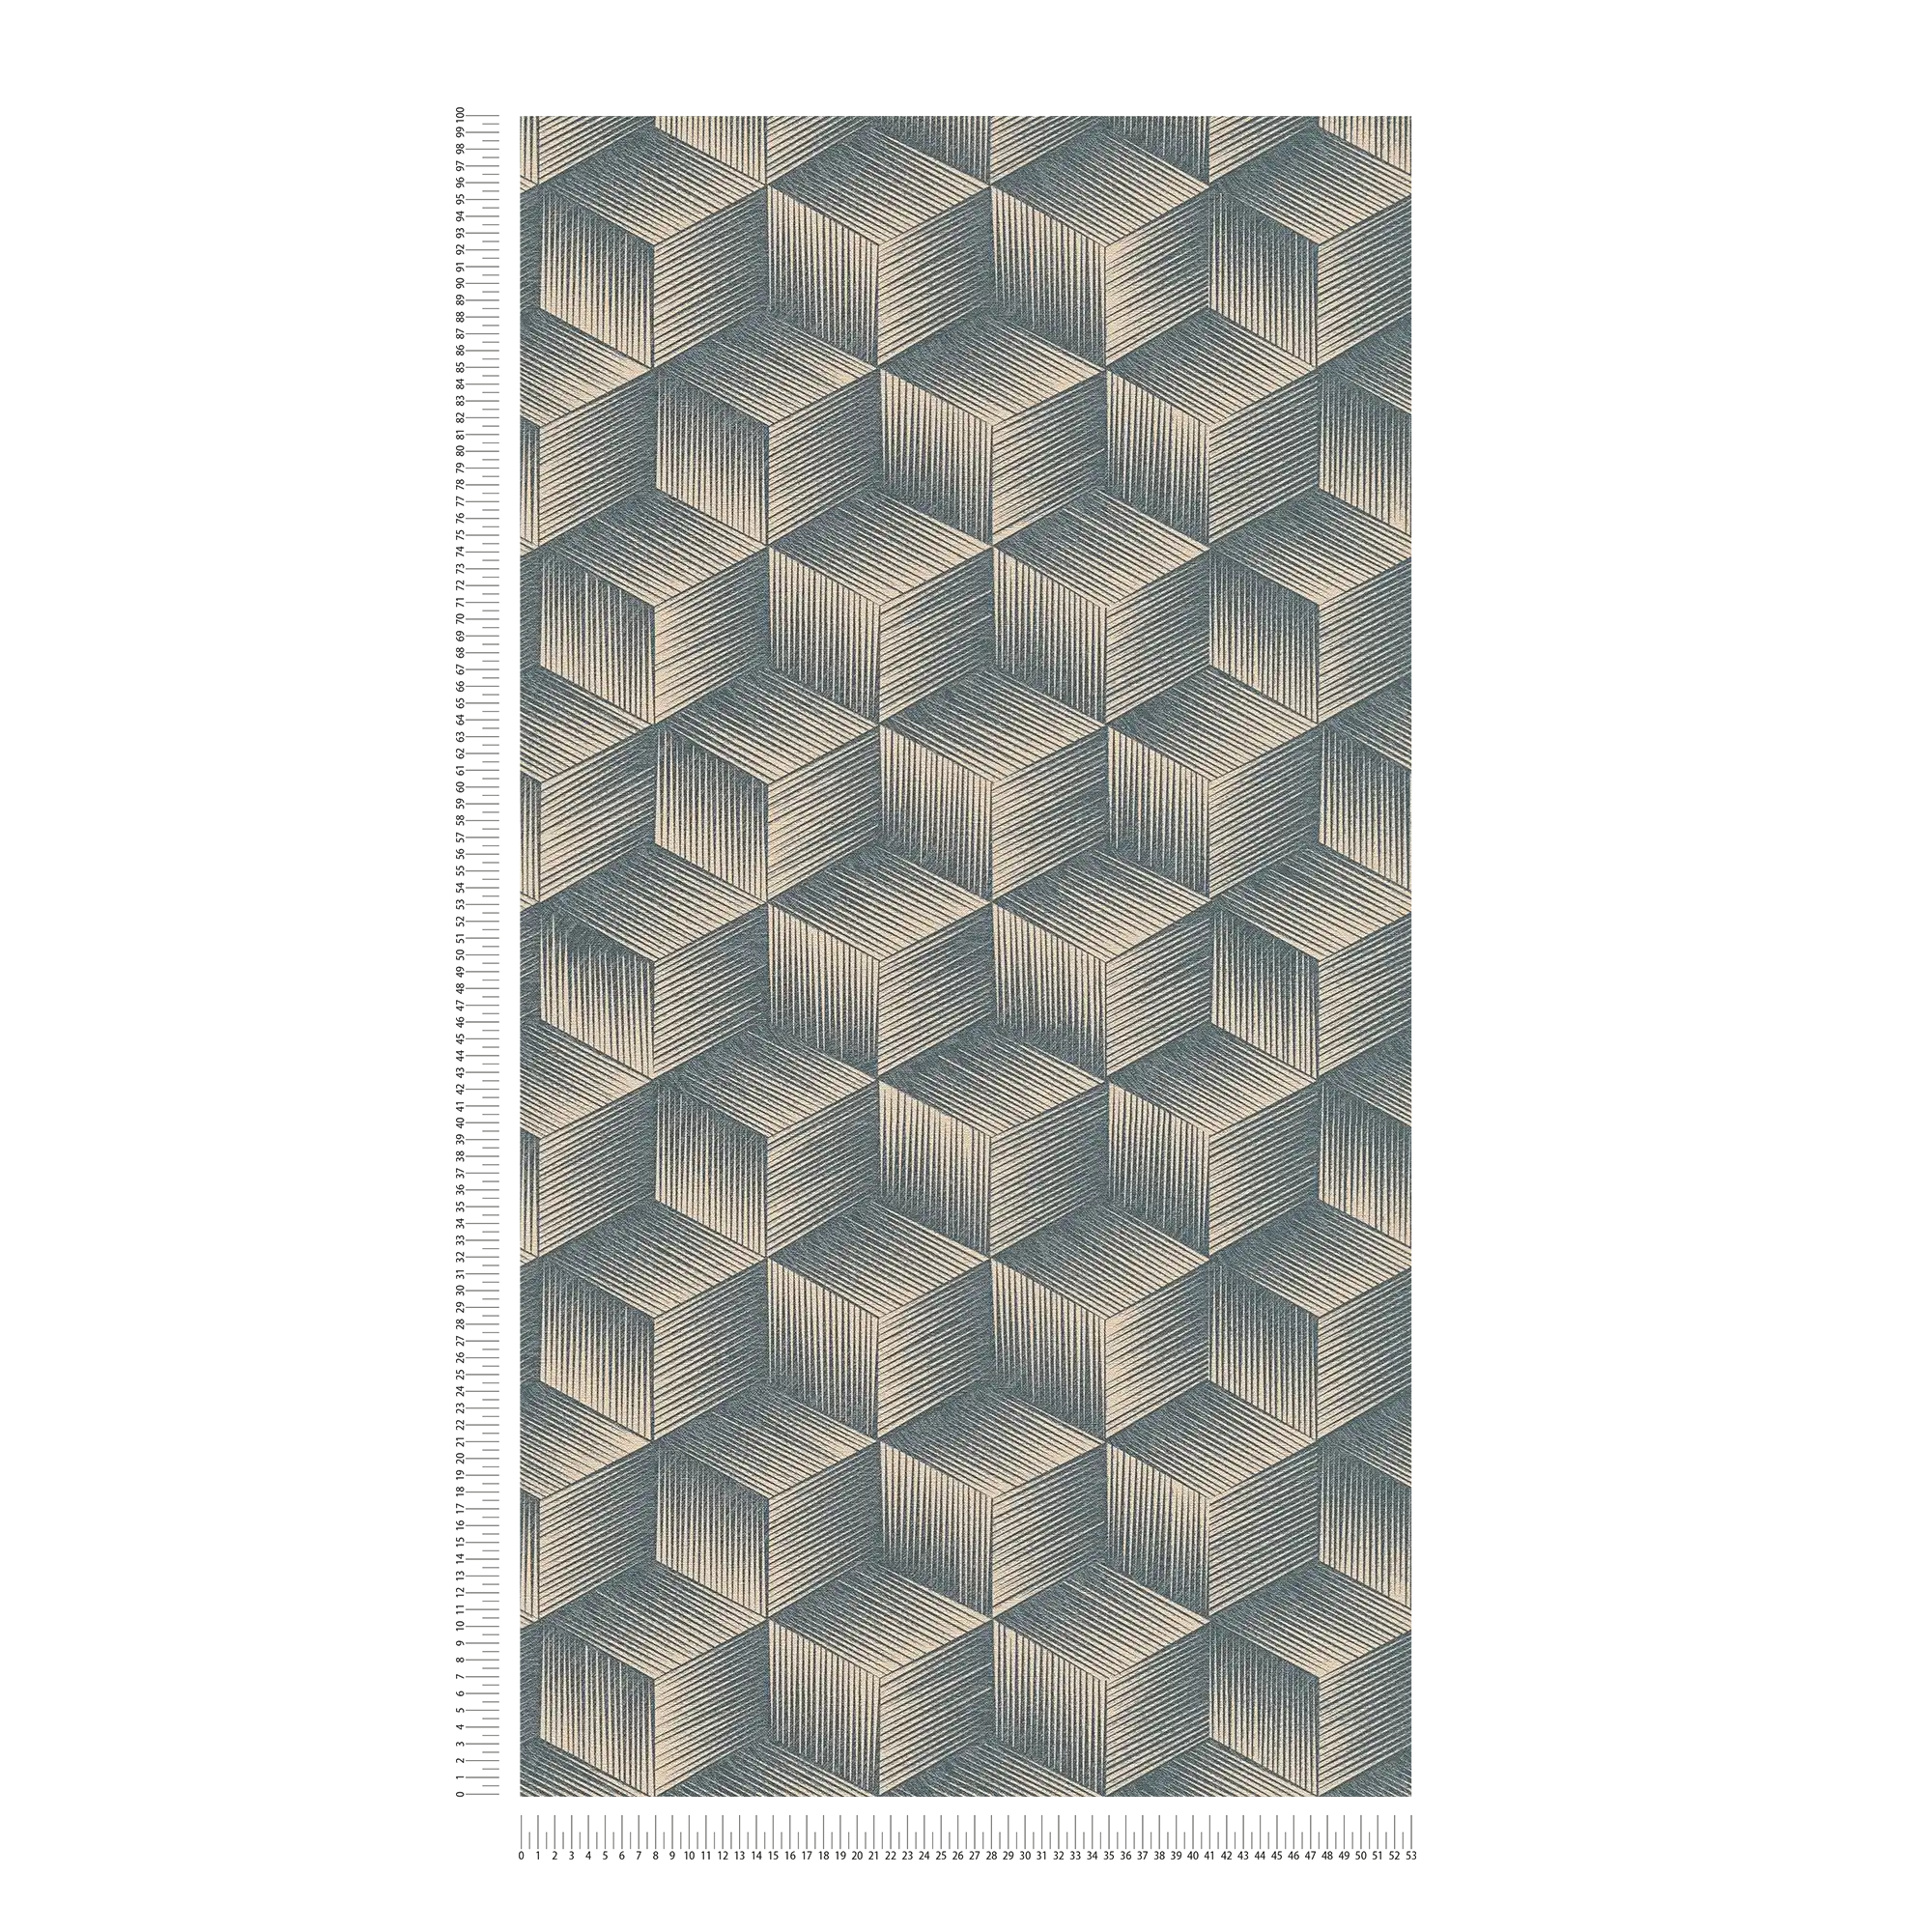             Non-woven wallpaper with cube pattern 3D-optics PVC-free - blue, beige
        